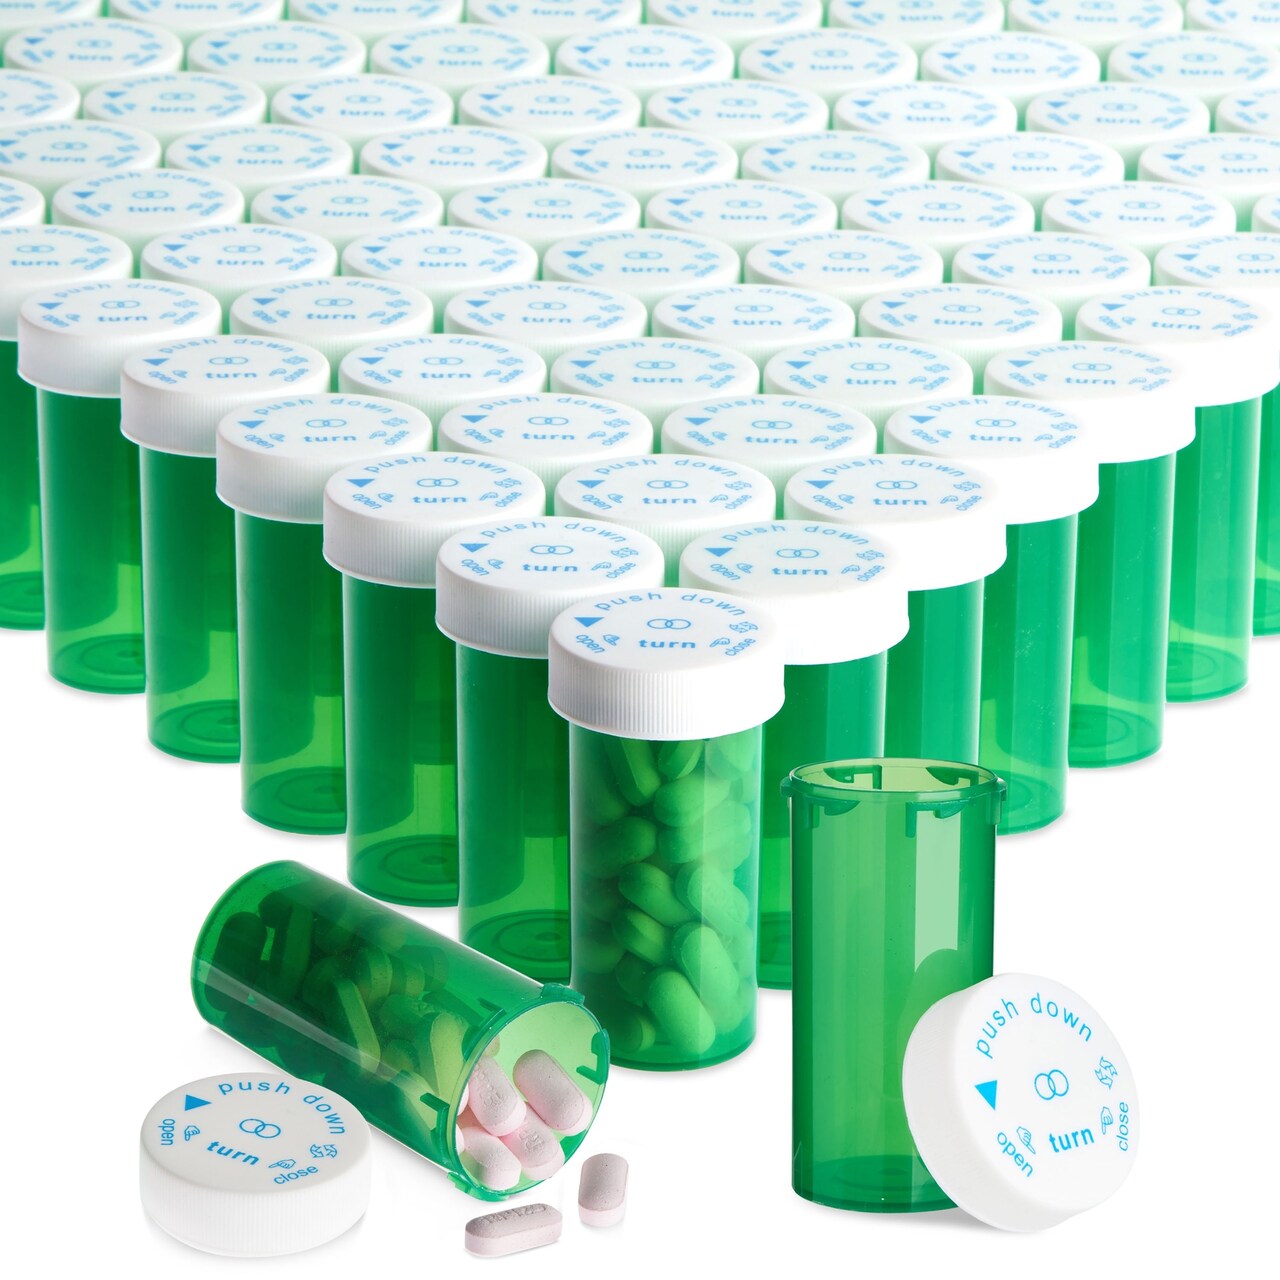 250 Pack Empty Pill Bottles with Caps, Plastic 13 Dram Medicine